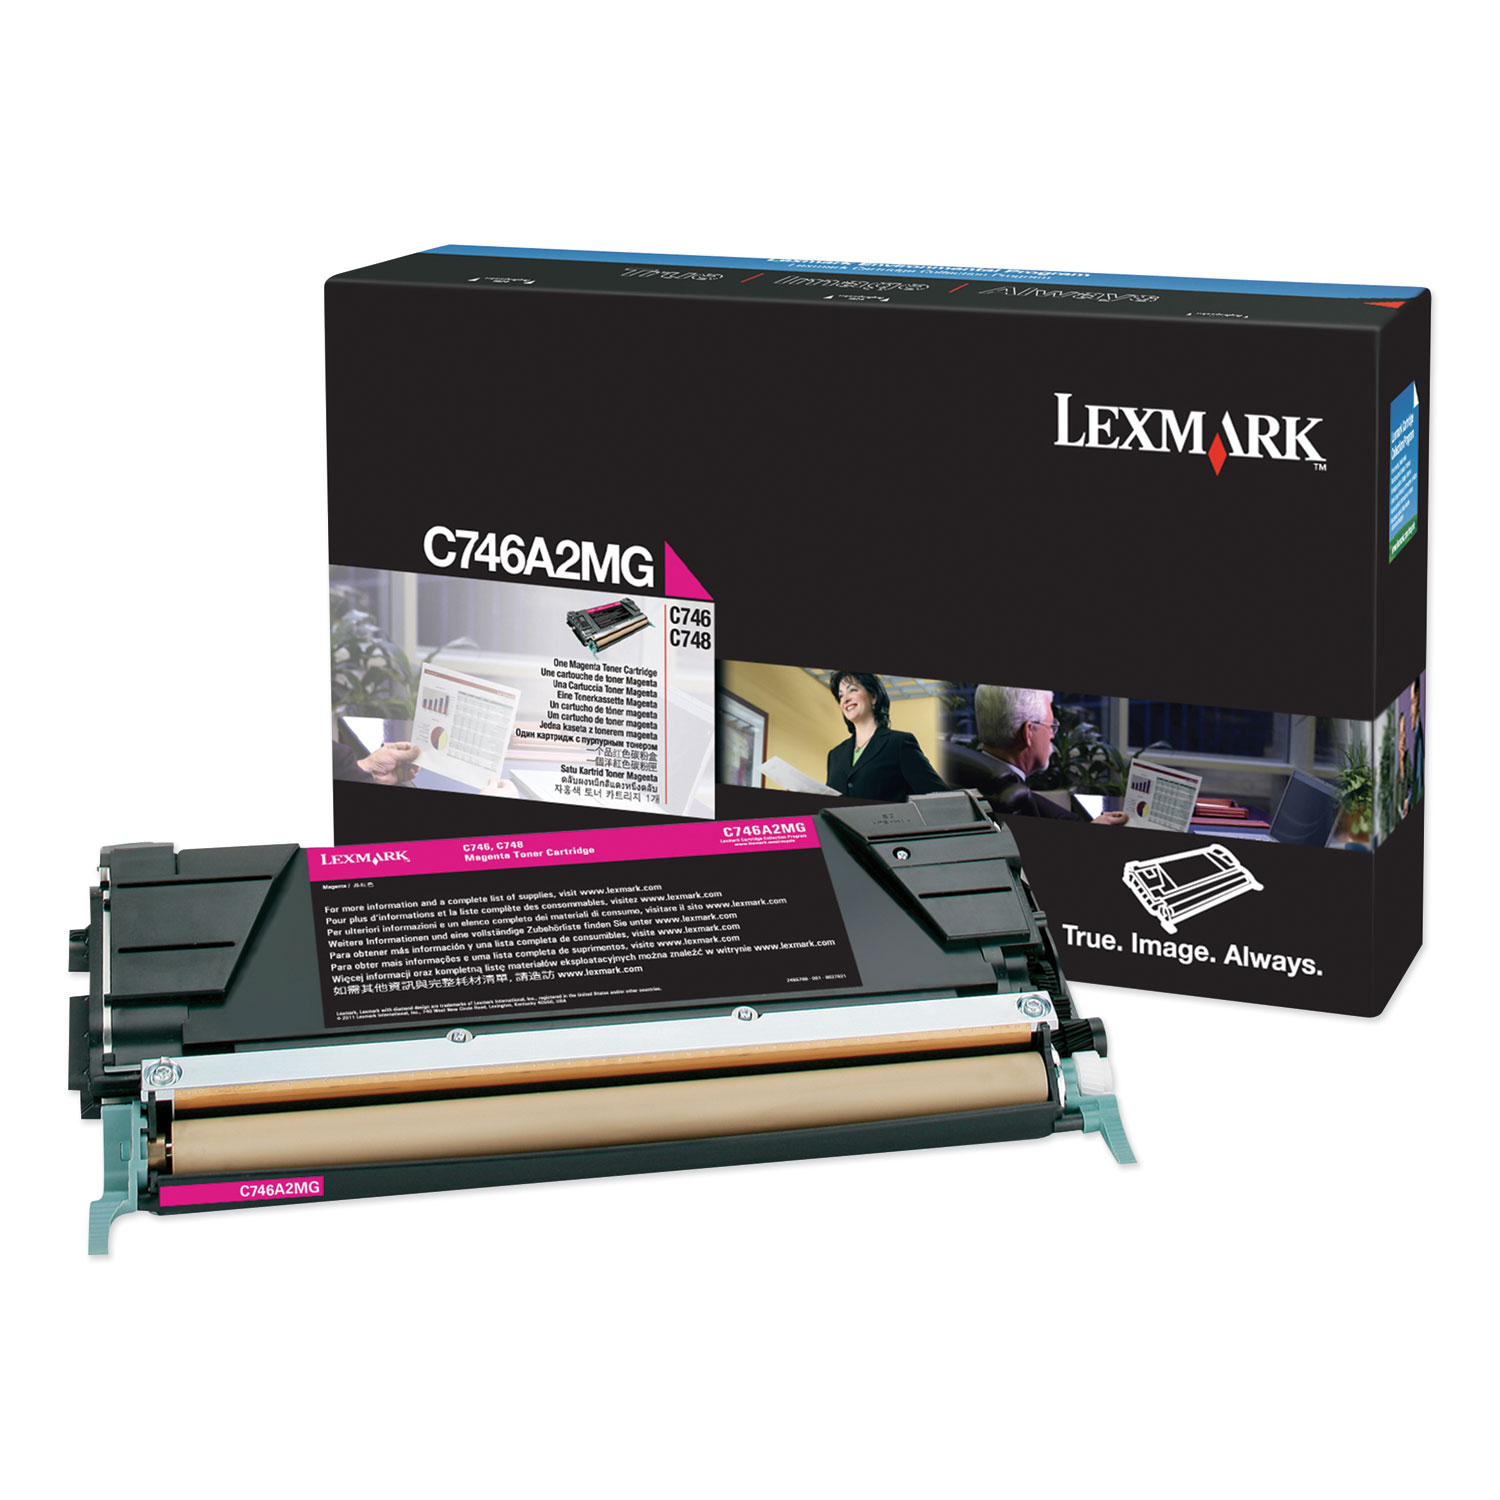  Lexmark C746A2MG C746A2MG Toner, 7000 Page-Yield, Magenta (LEXC746A2MG) 